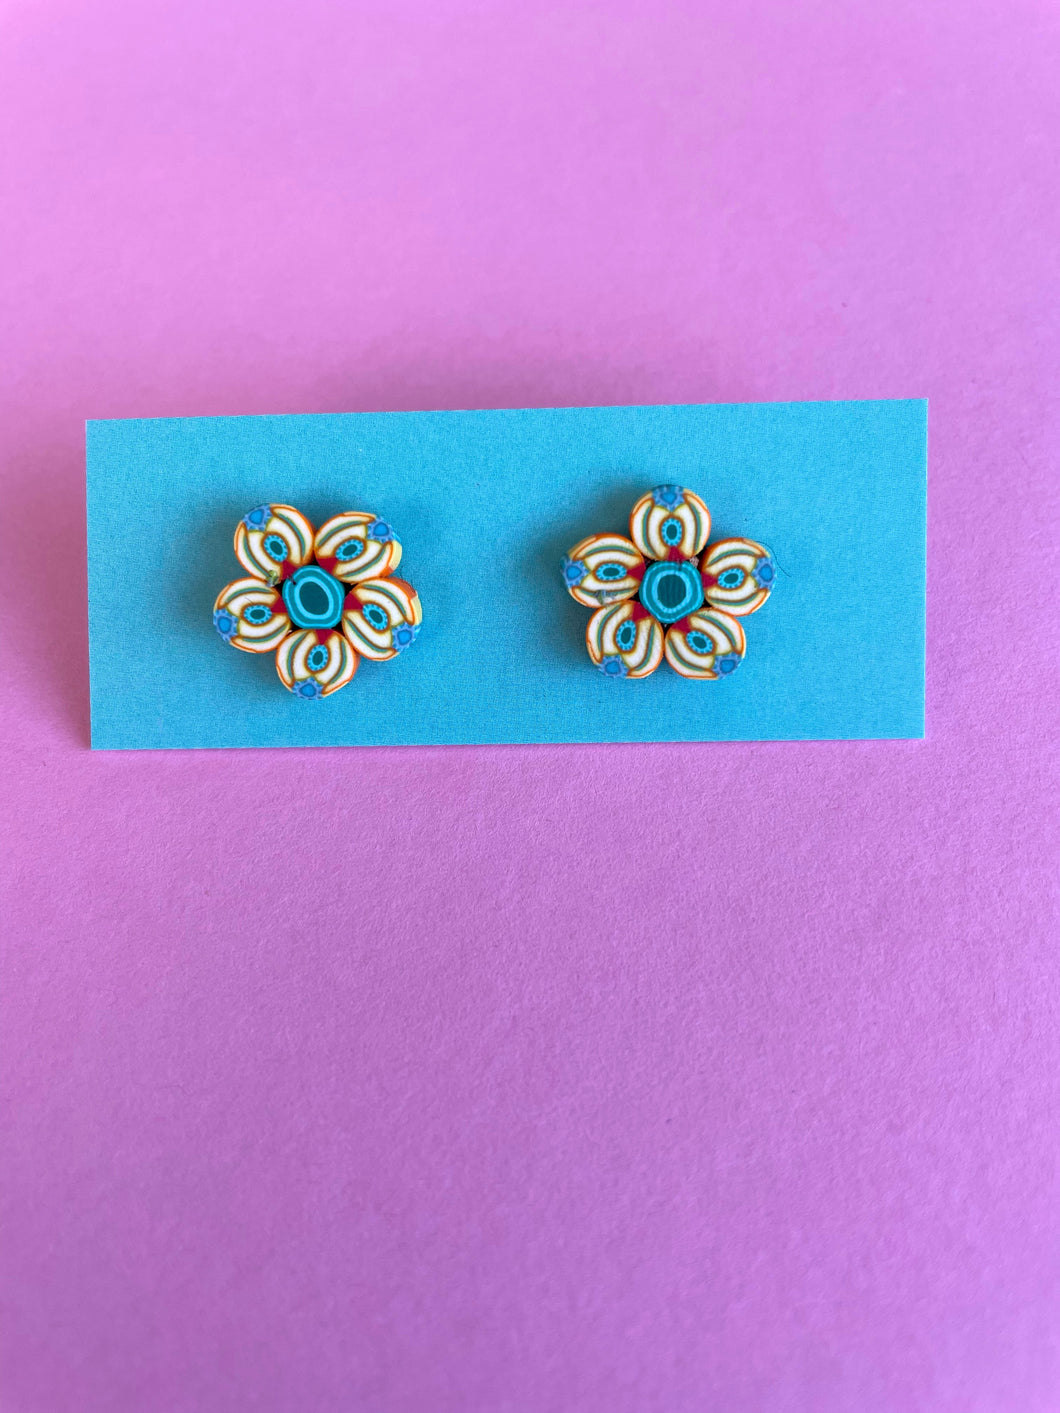 Stud earrings in yellow and blue flower shape